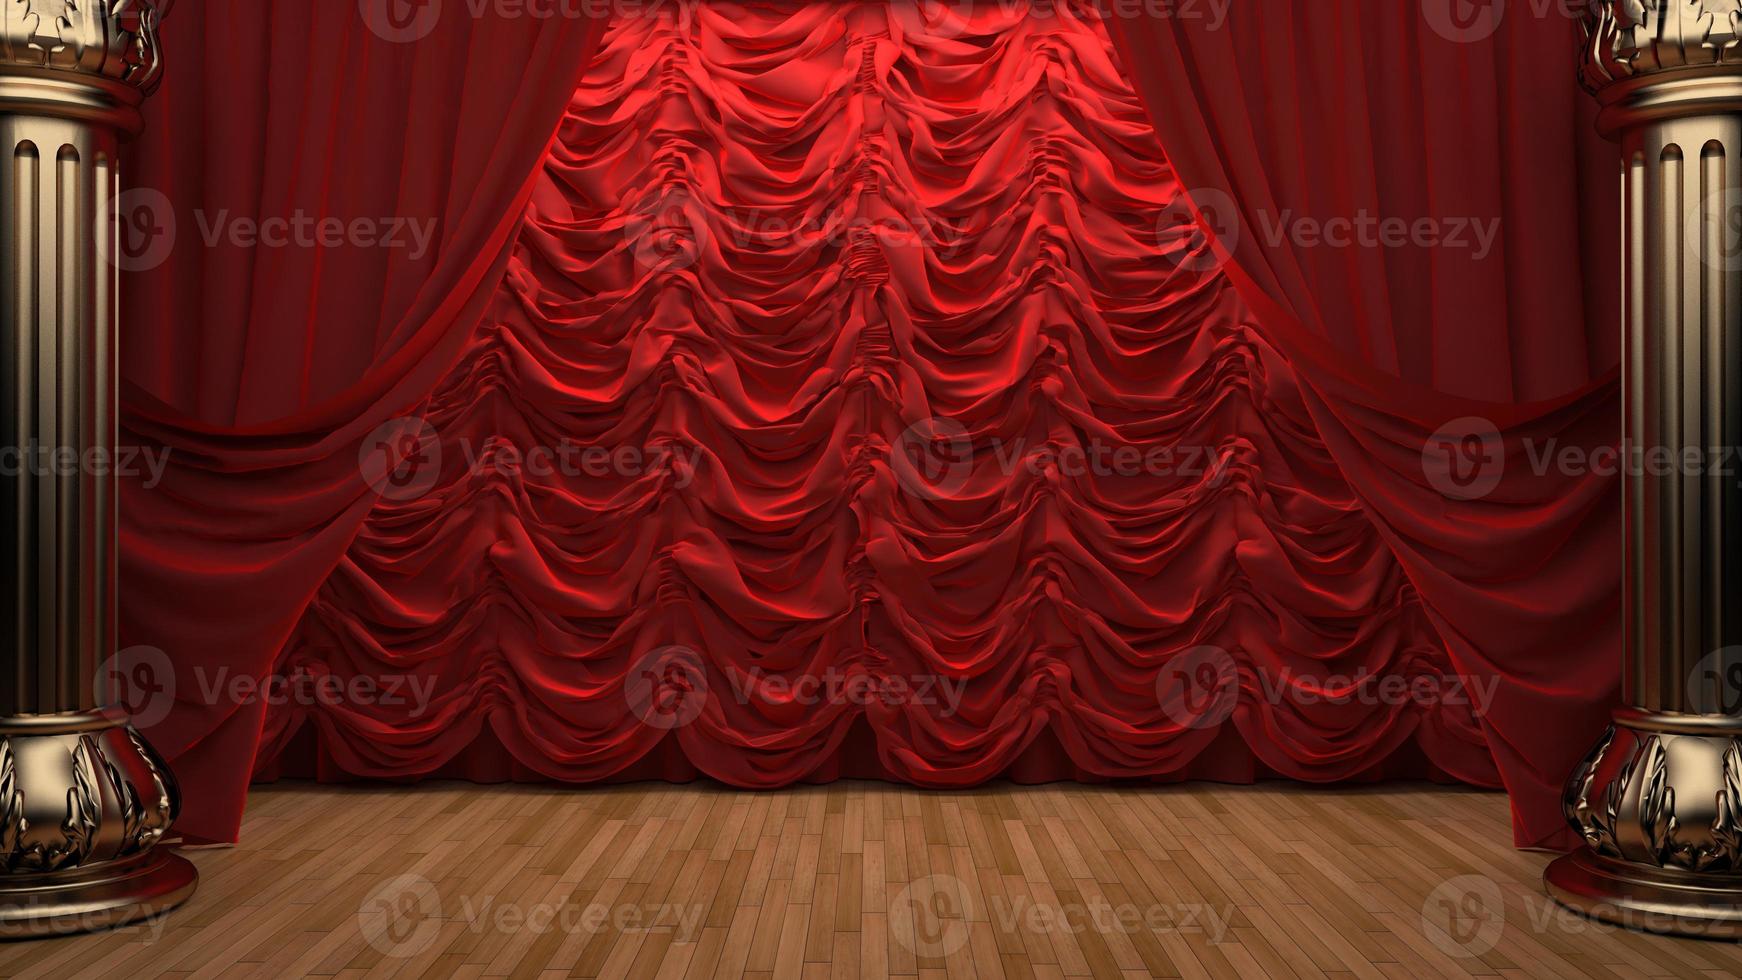 cortina de terciopelo rojo abriendo la escena foto